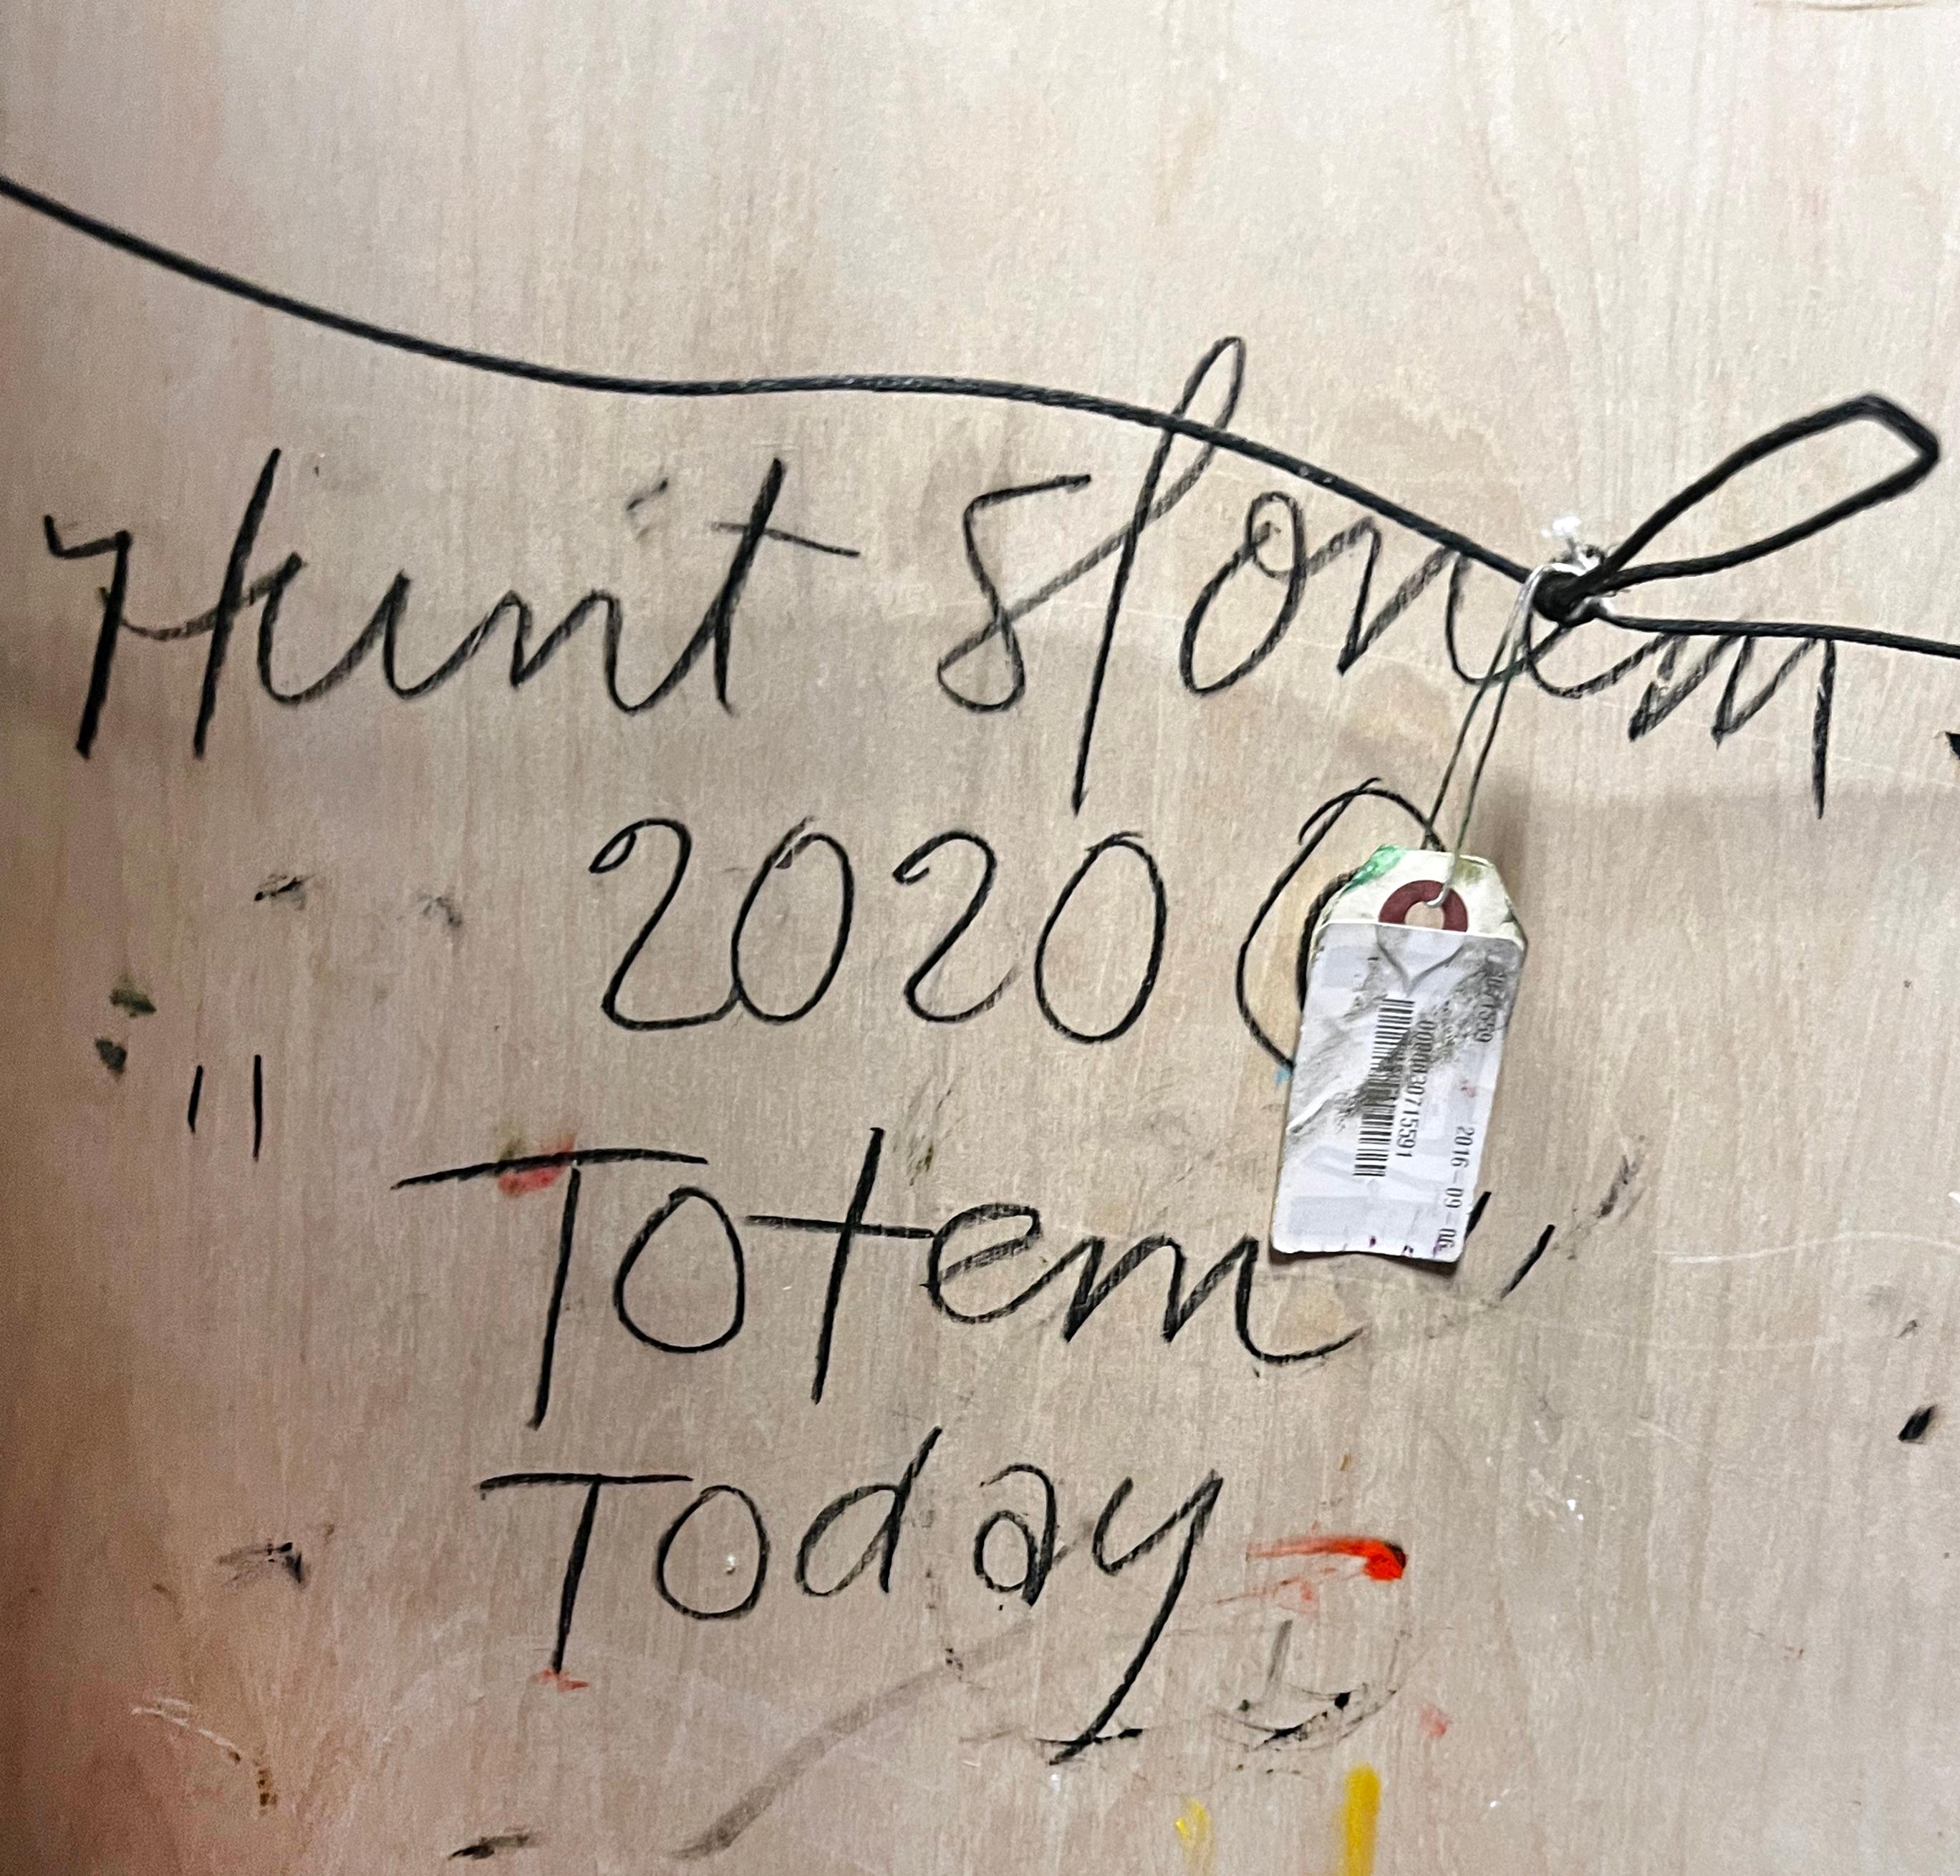 Artist:  Slonem, Hunt
Title:  Totem Today
Series:  Bunnies
Date:  2020
Medium:  Oil on wood
Unframed Dimensions:  26